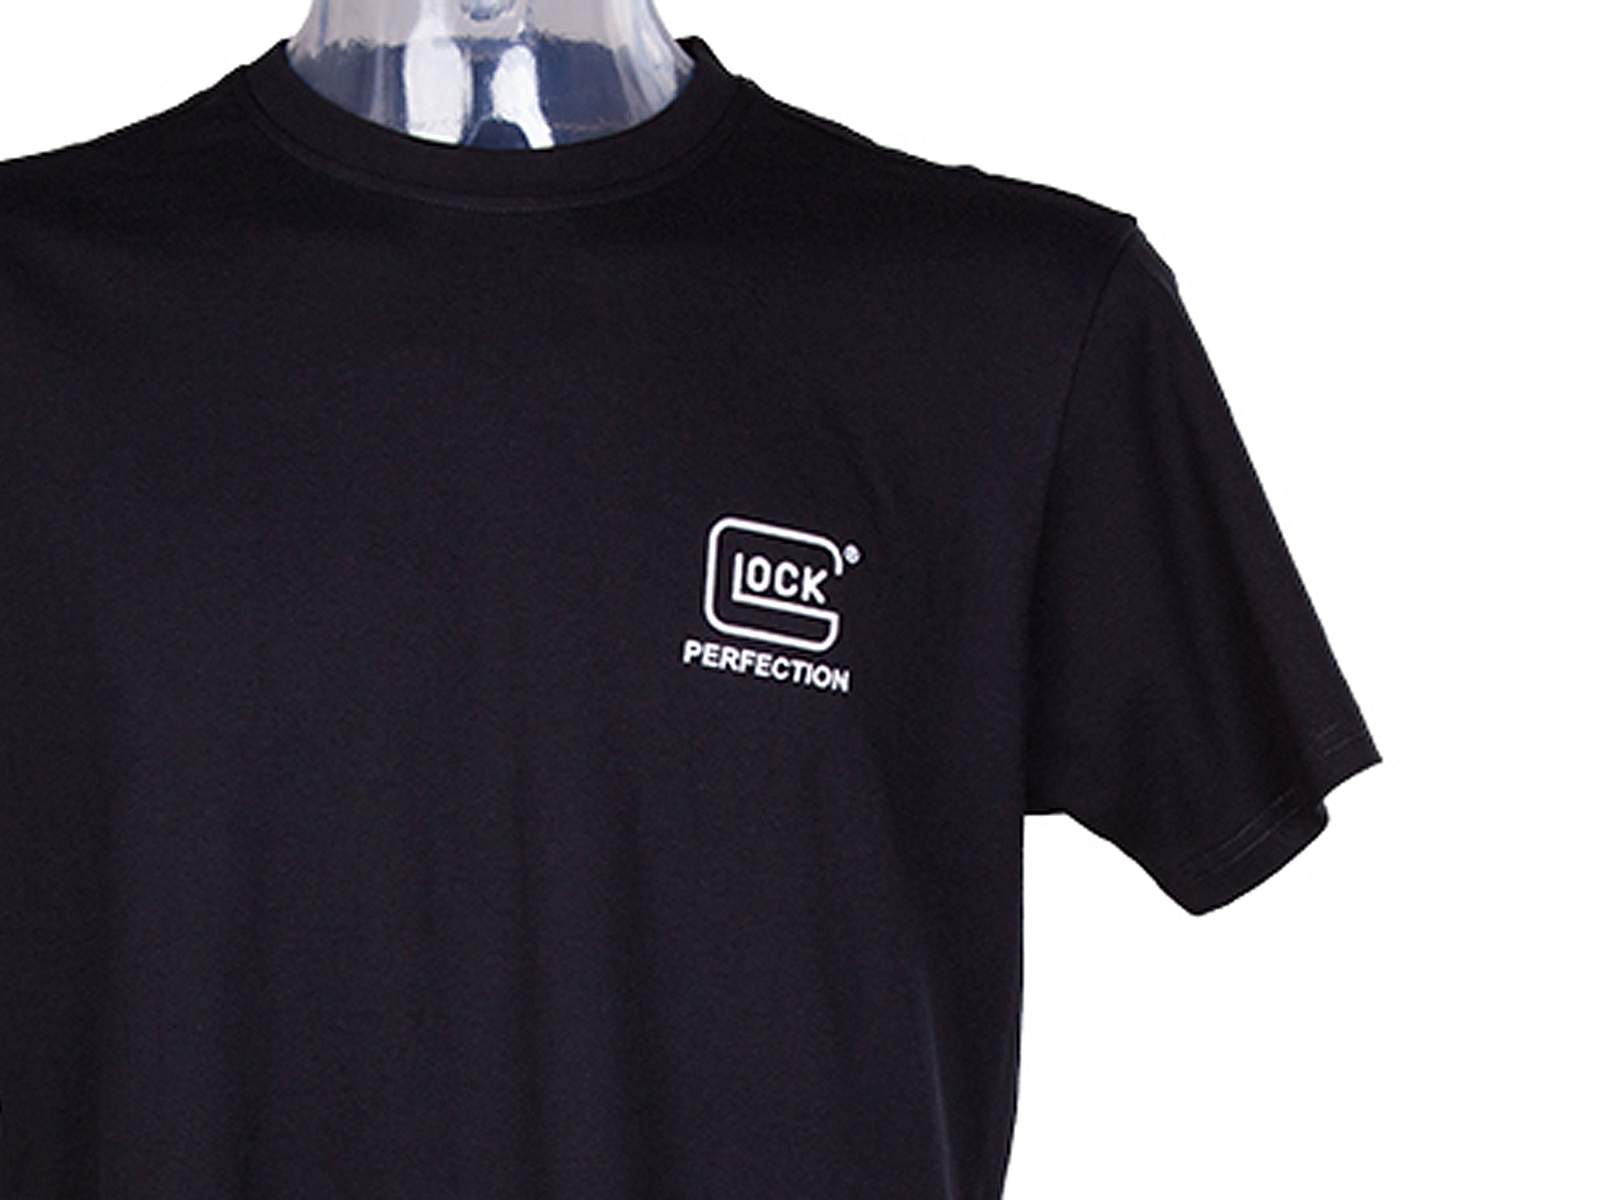 GLOCK APPAREL/SHIRT GLOCK Perfection Tシャツ Black (size L)